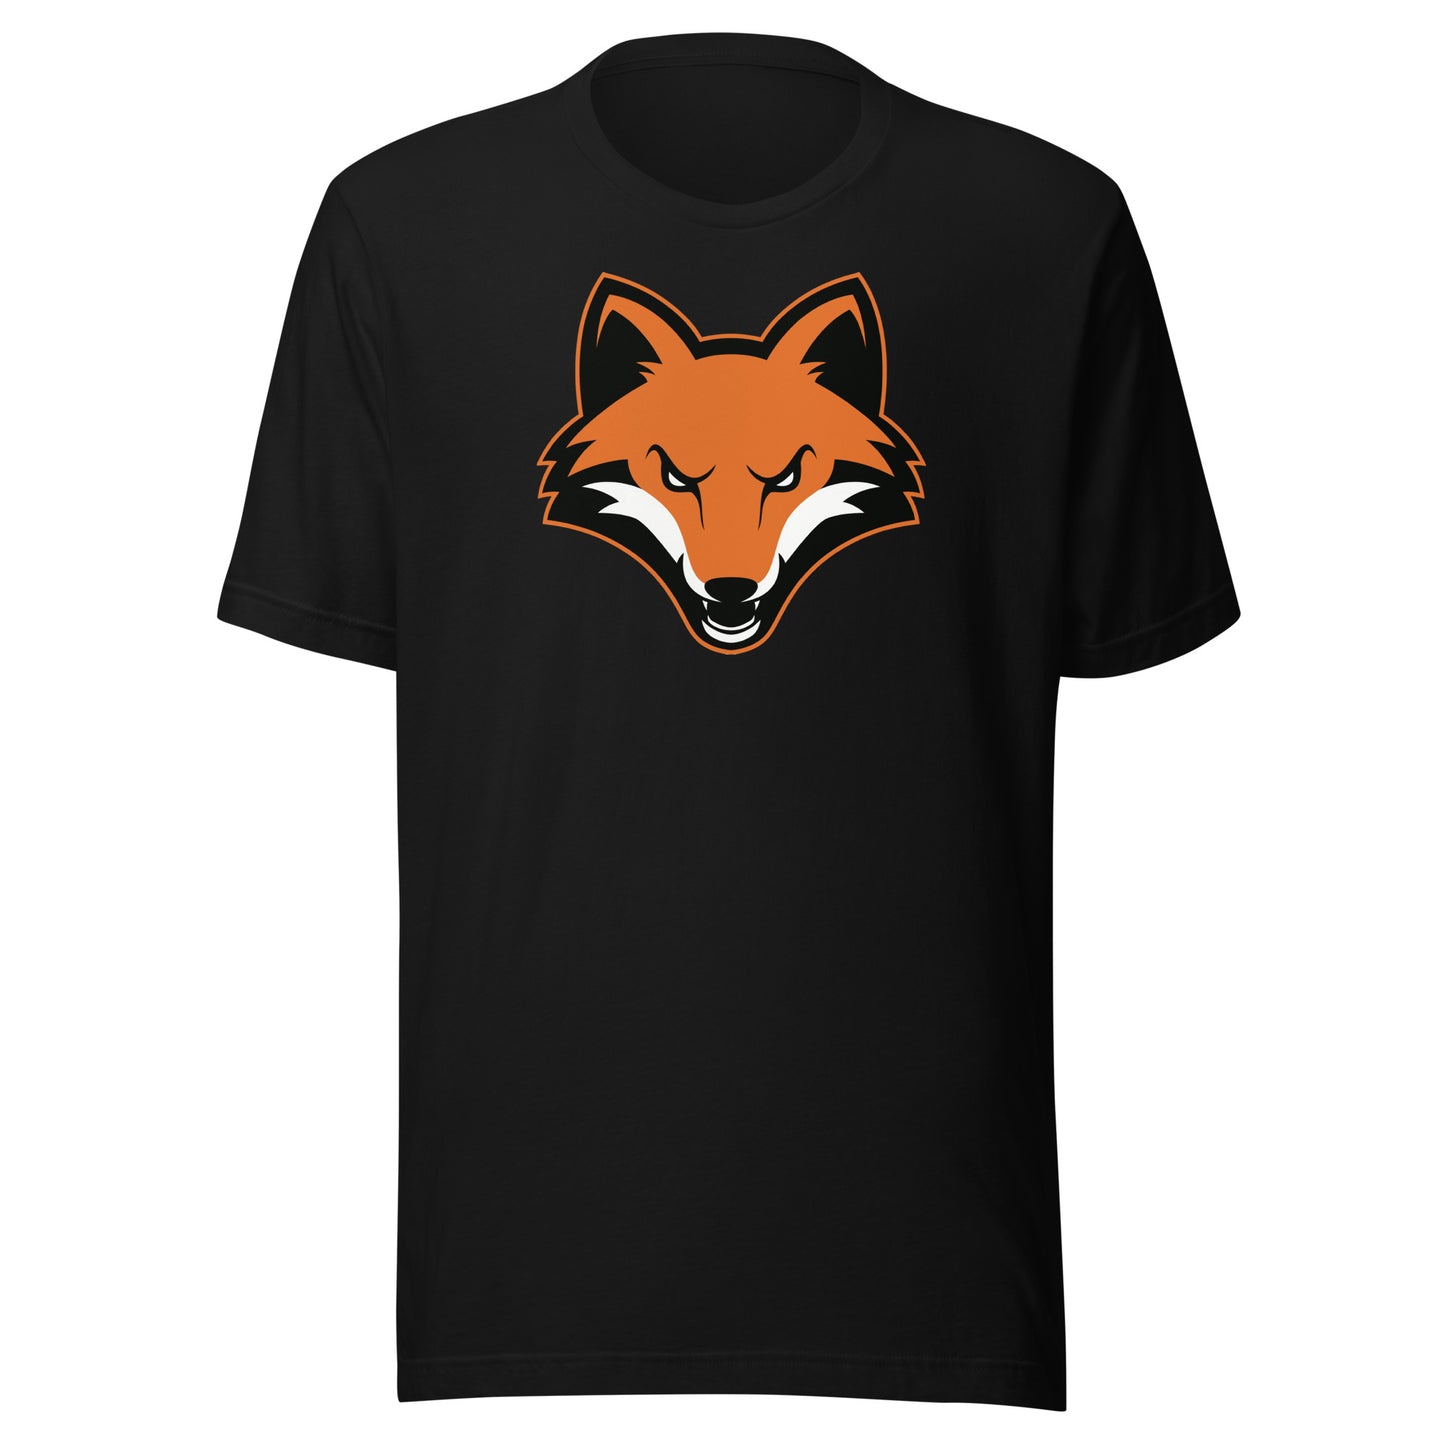 FOX IT UP Unisex t-shirt